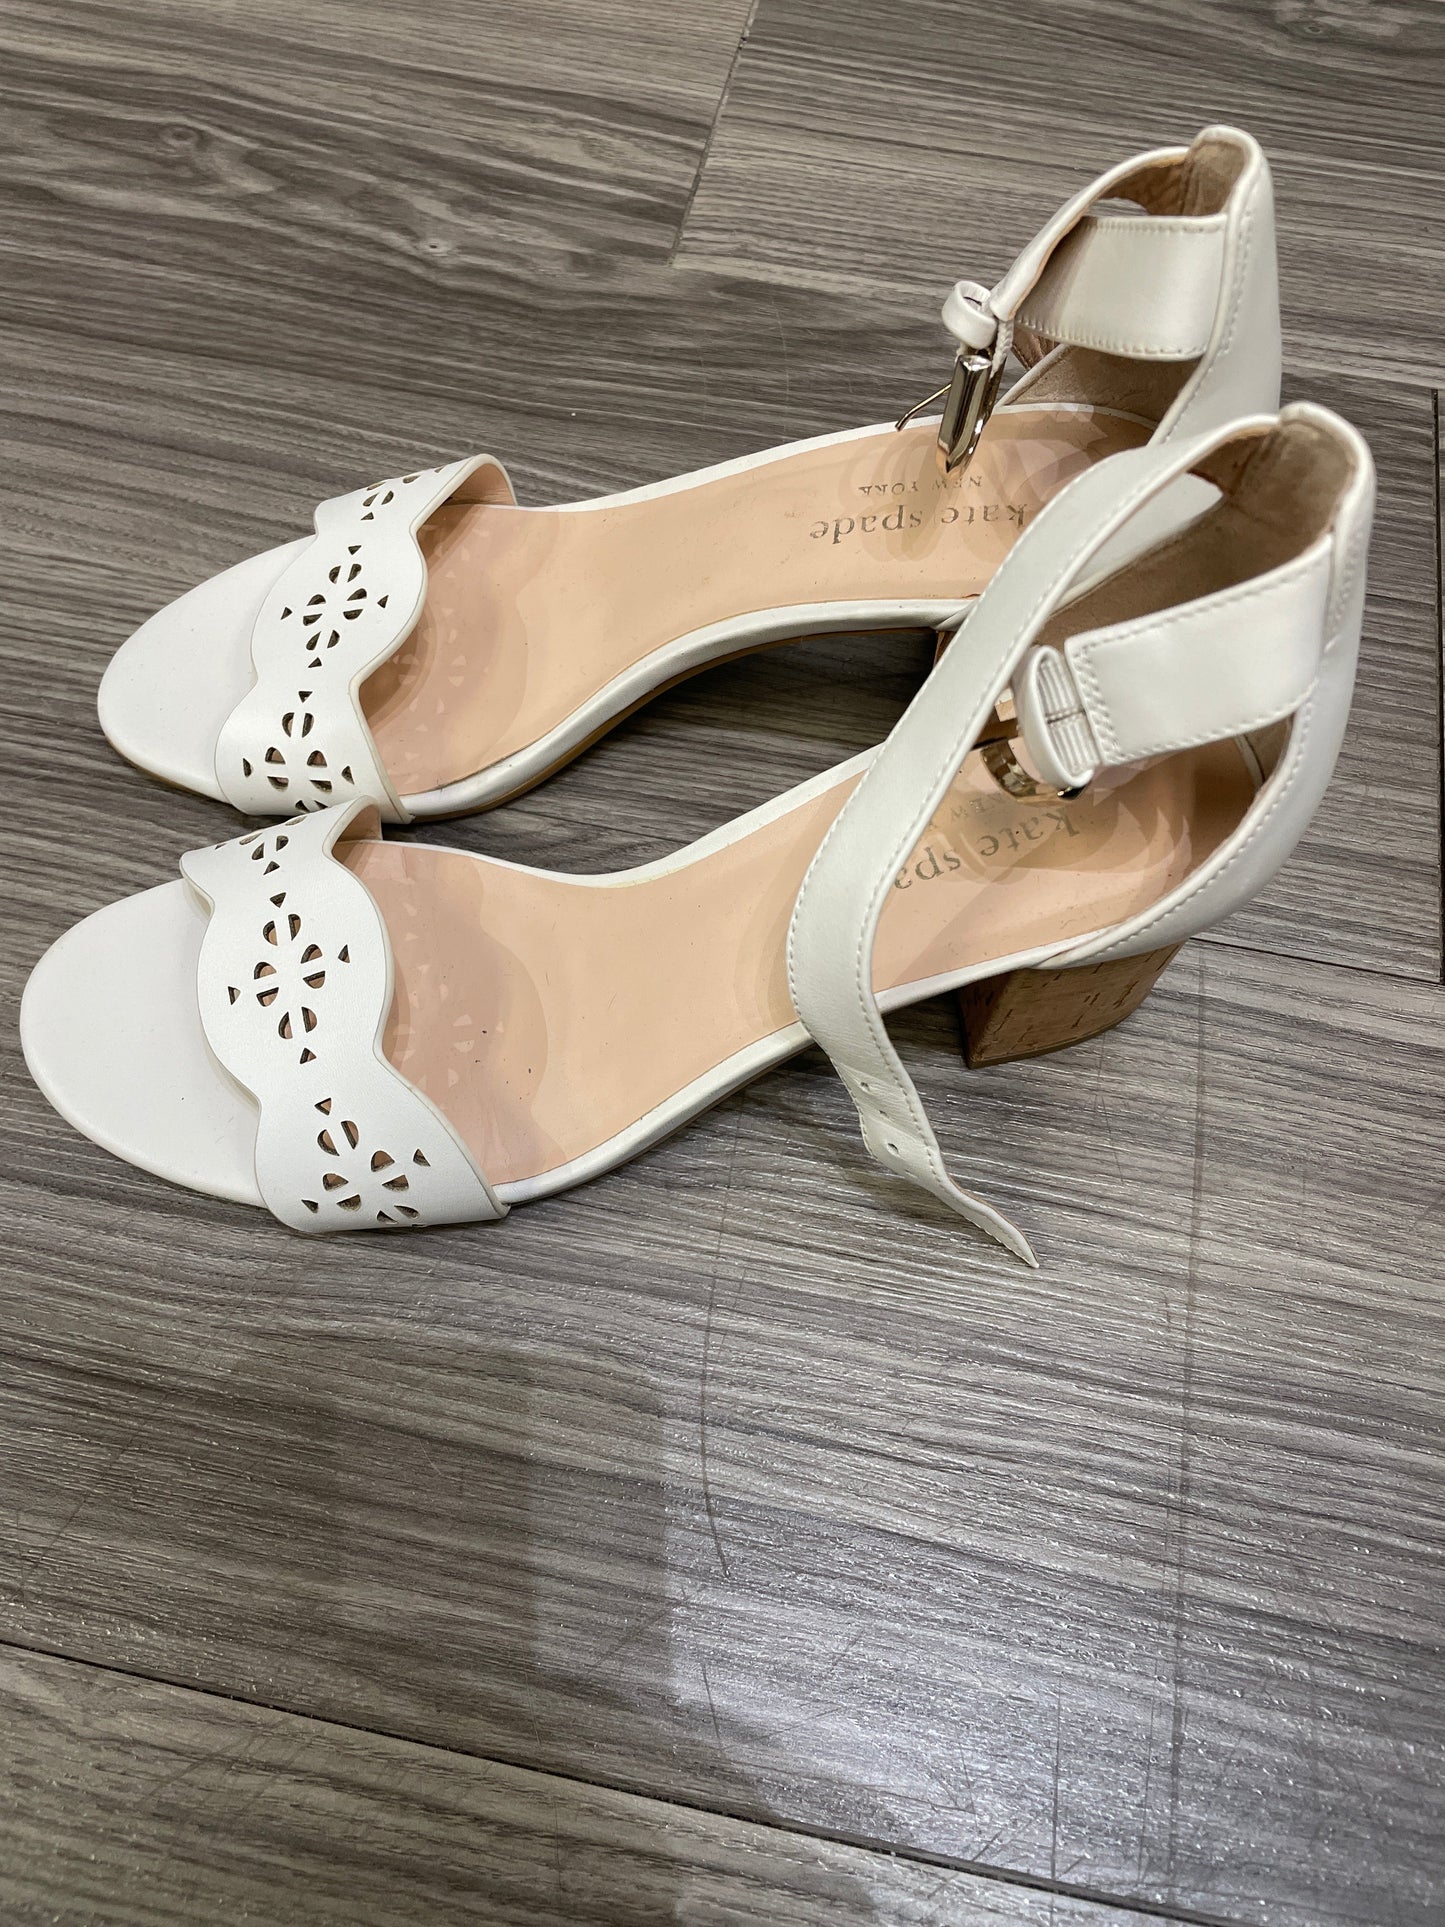 Pink & White Shoes Heels Block Kate Spade, Size 6.5